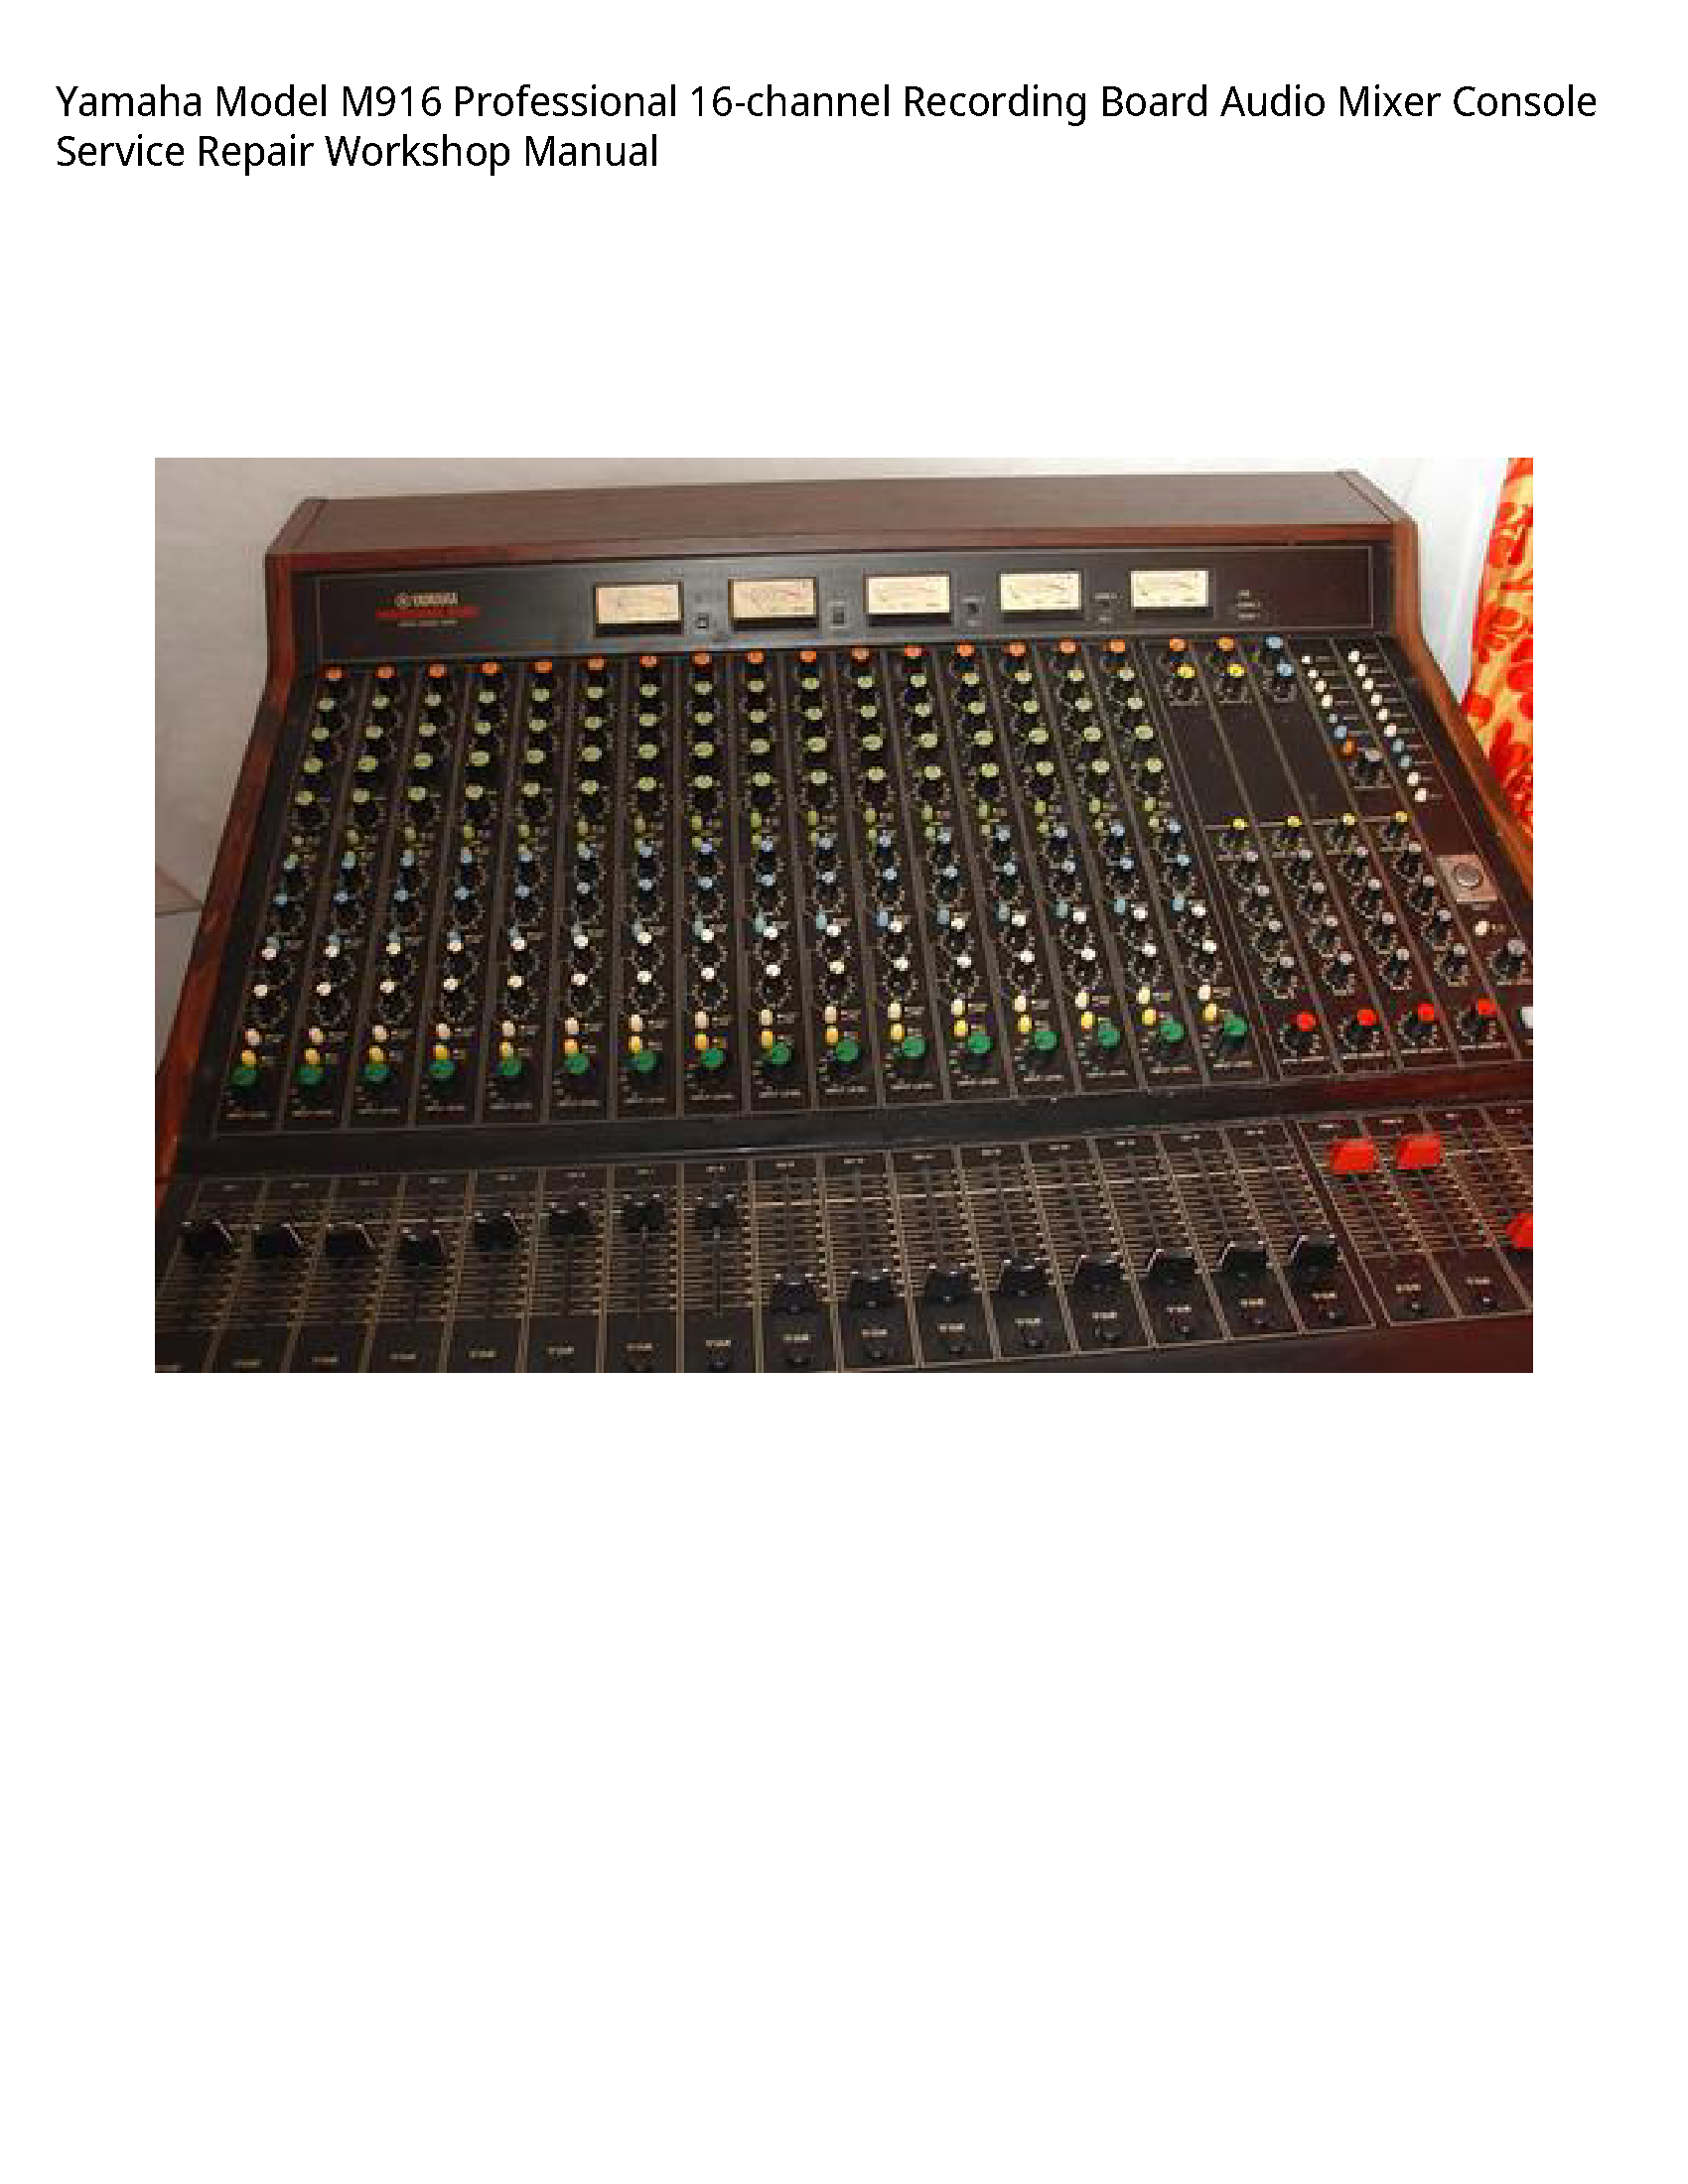 Yamaha M916 Model Professional Recording Board Audio Mixer Console manual